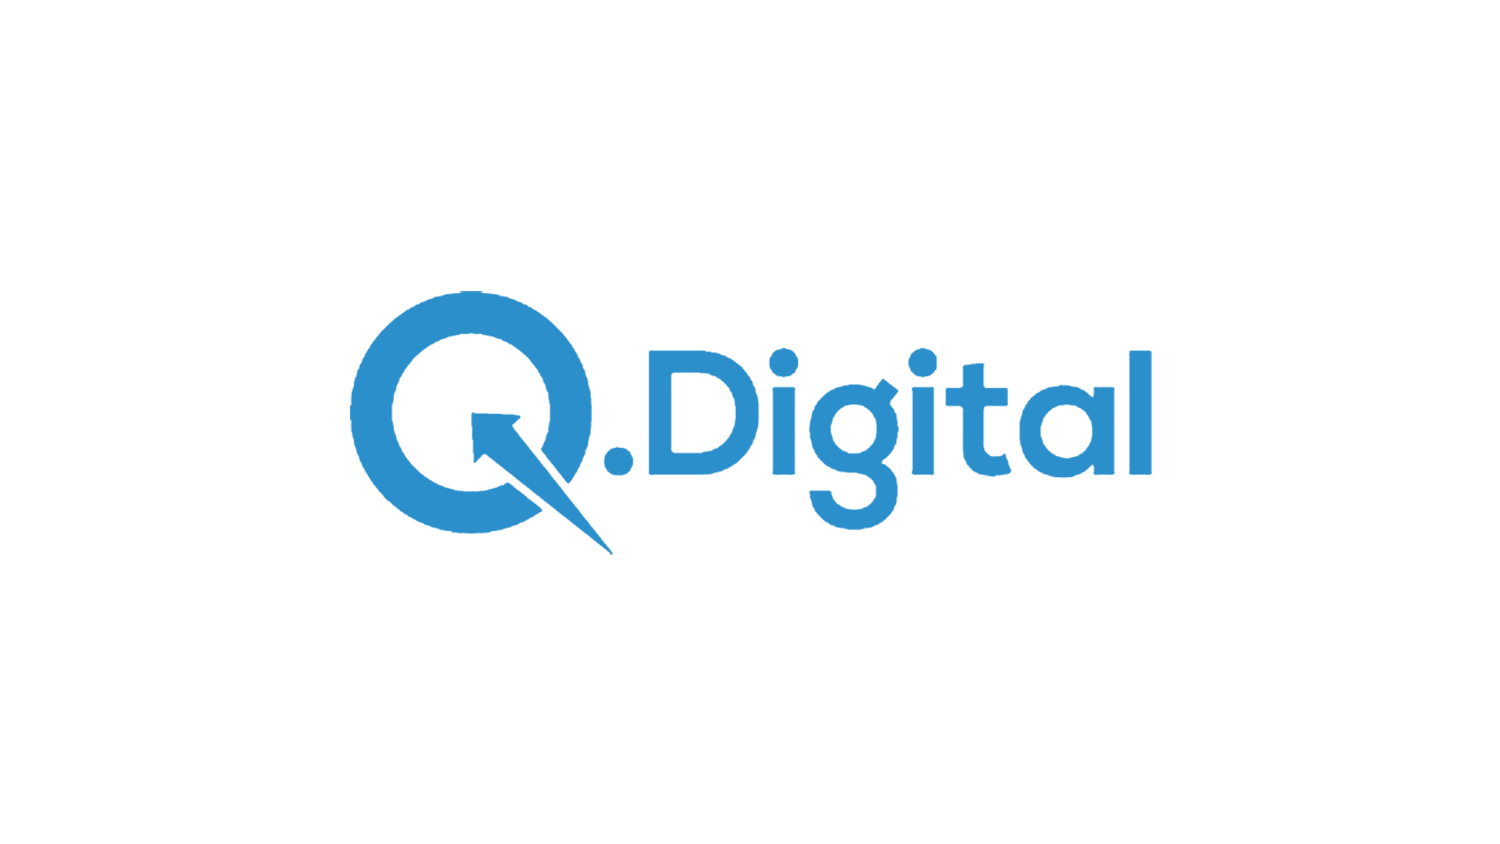 Q.Digital